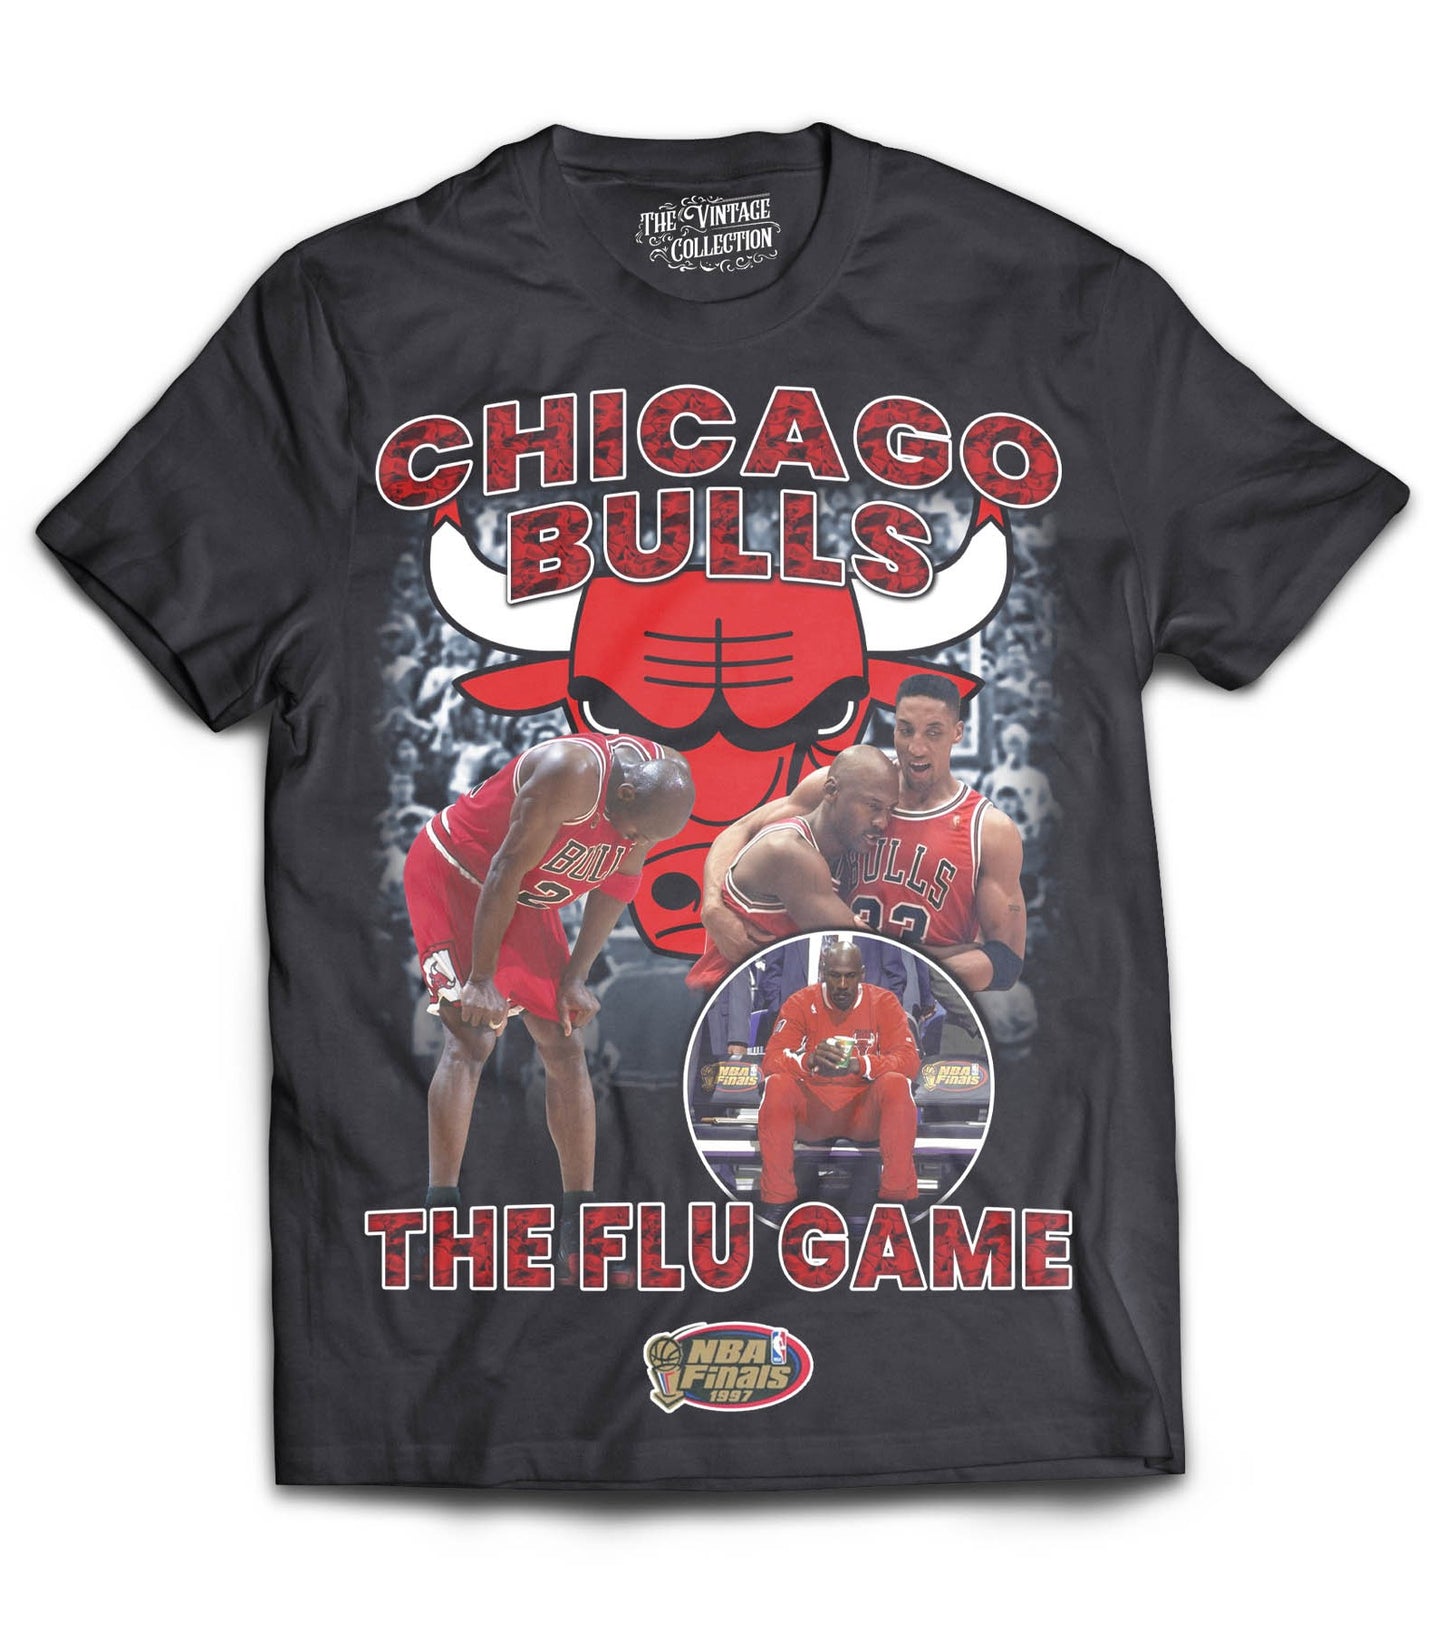 The Flu Game Tribute Shirt (Black)